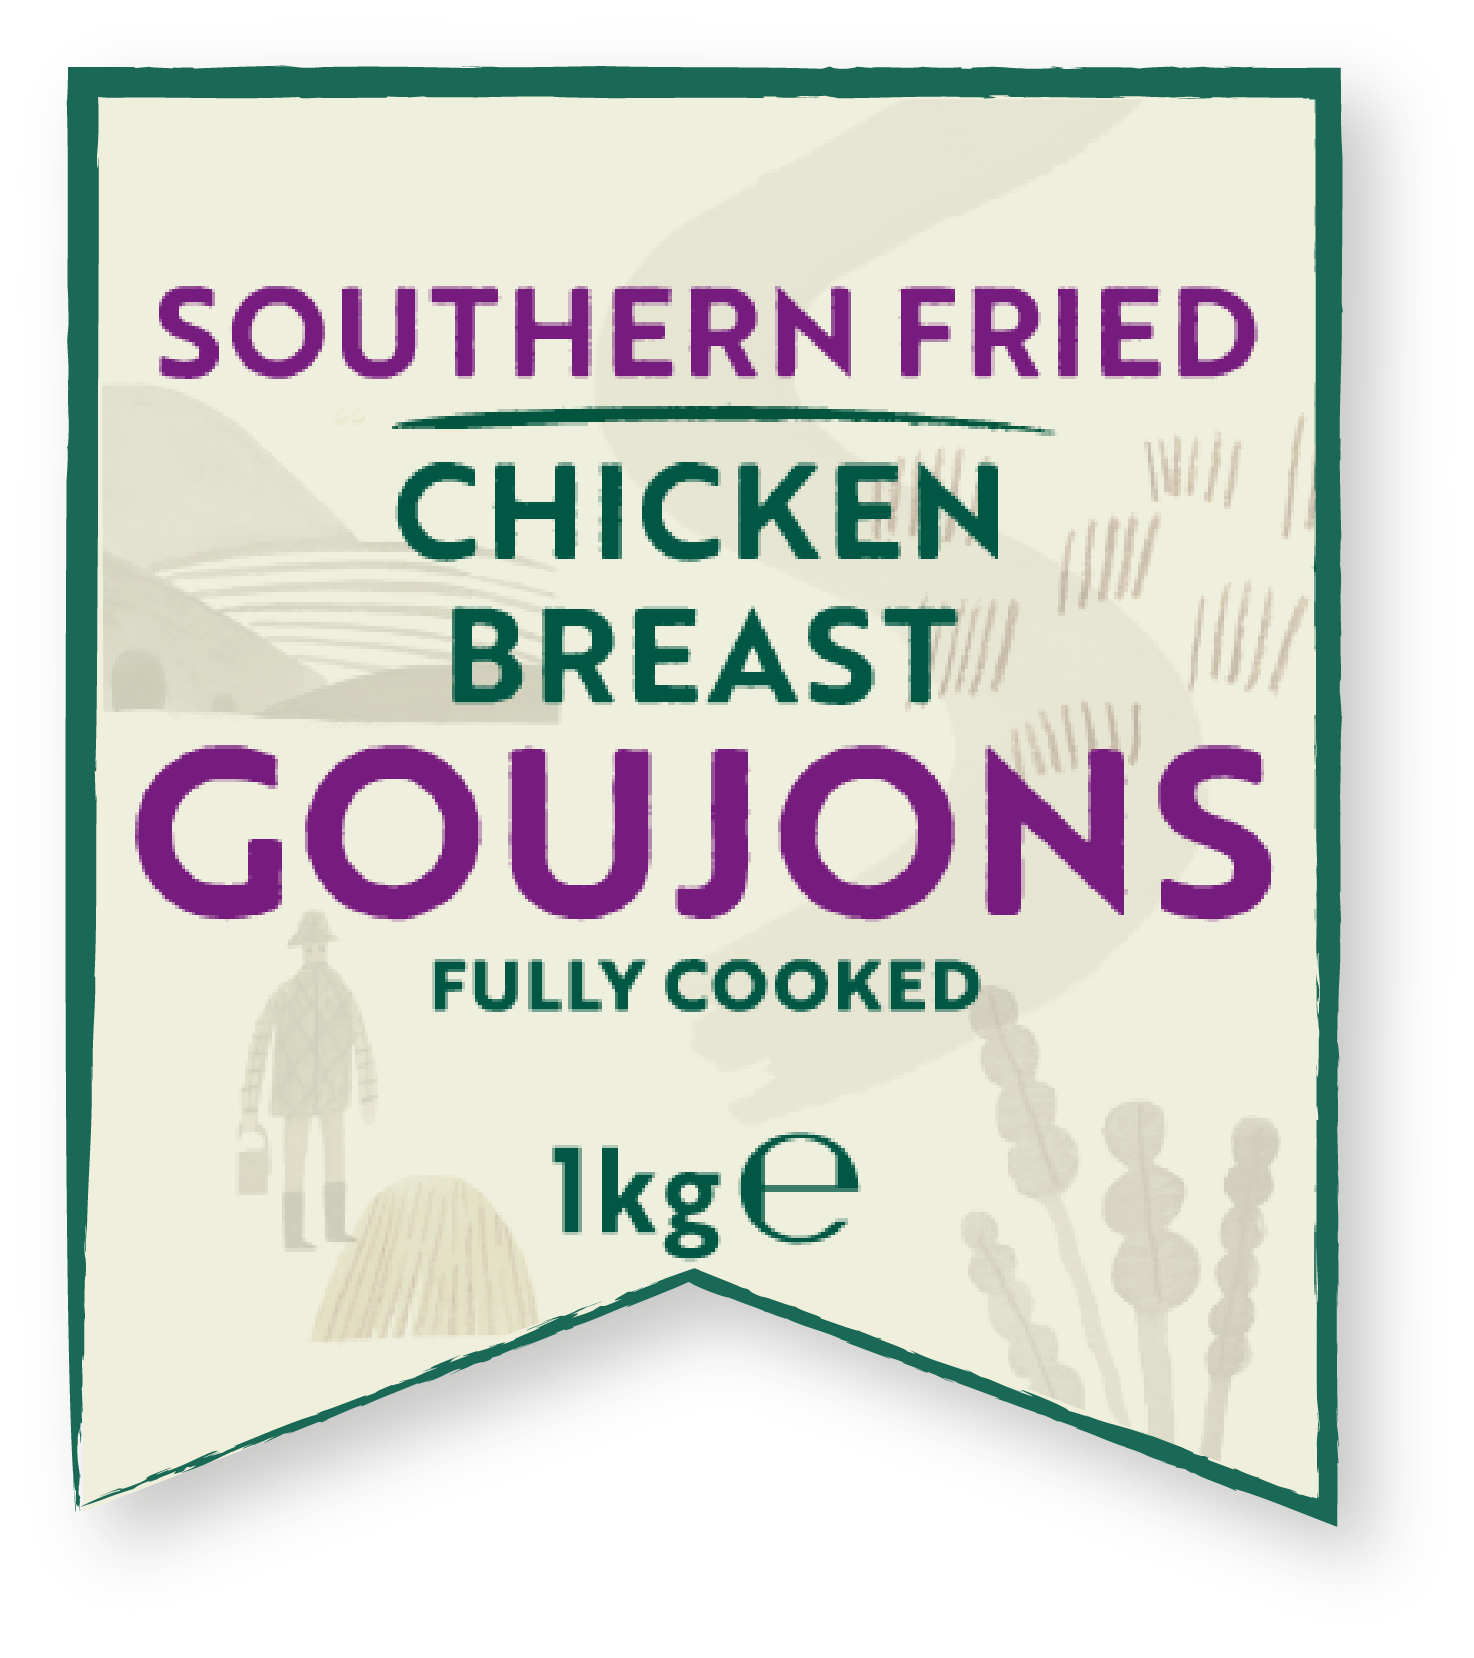 Southern fried chicken breast goujons